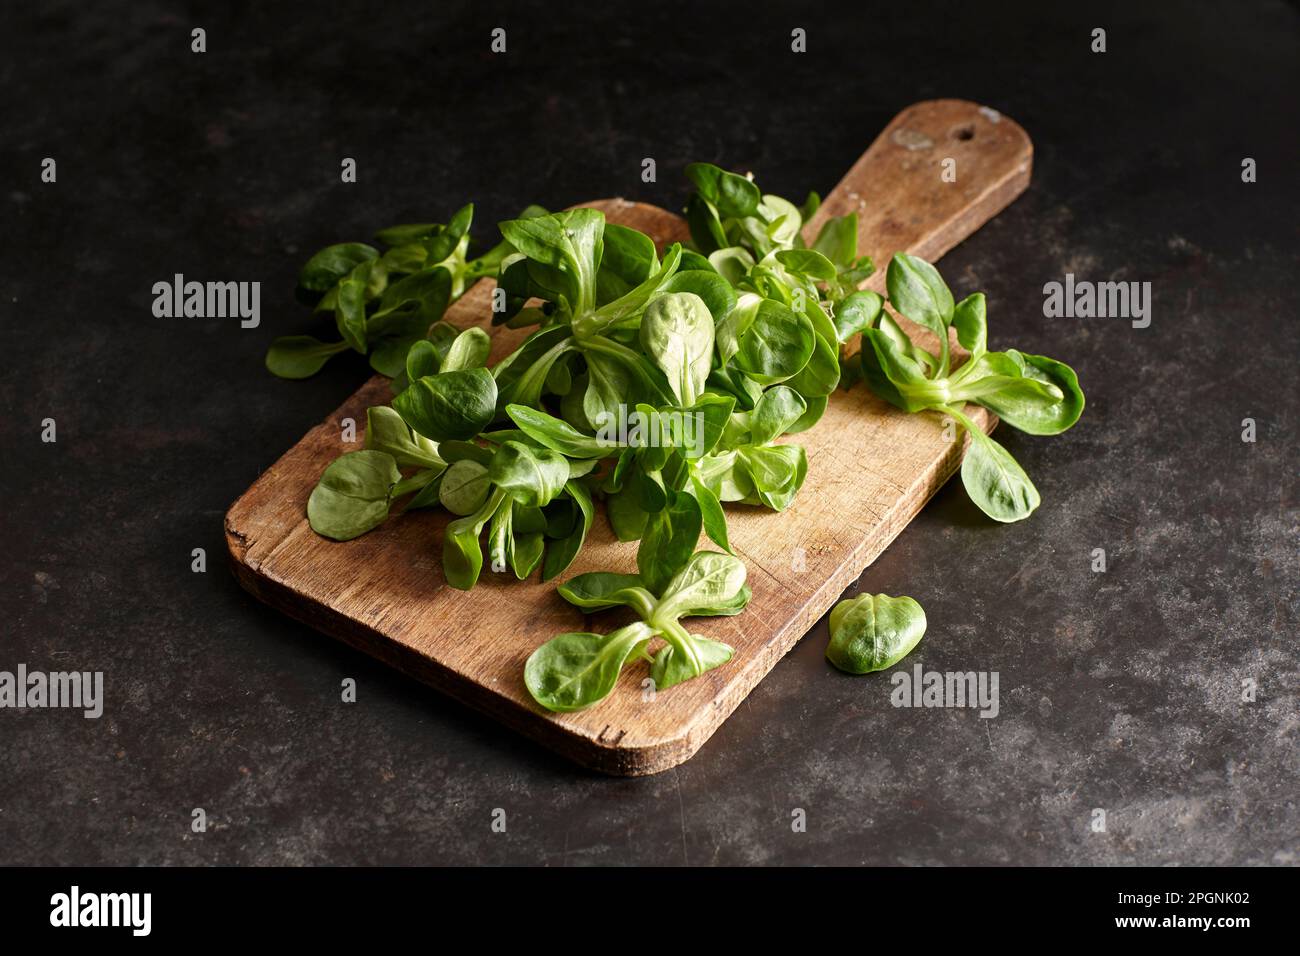 Studio shot of lamb's lettuce on cutting board Stock Photo